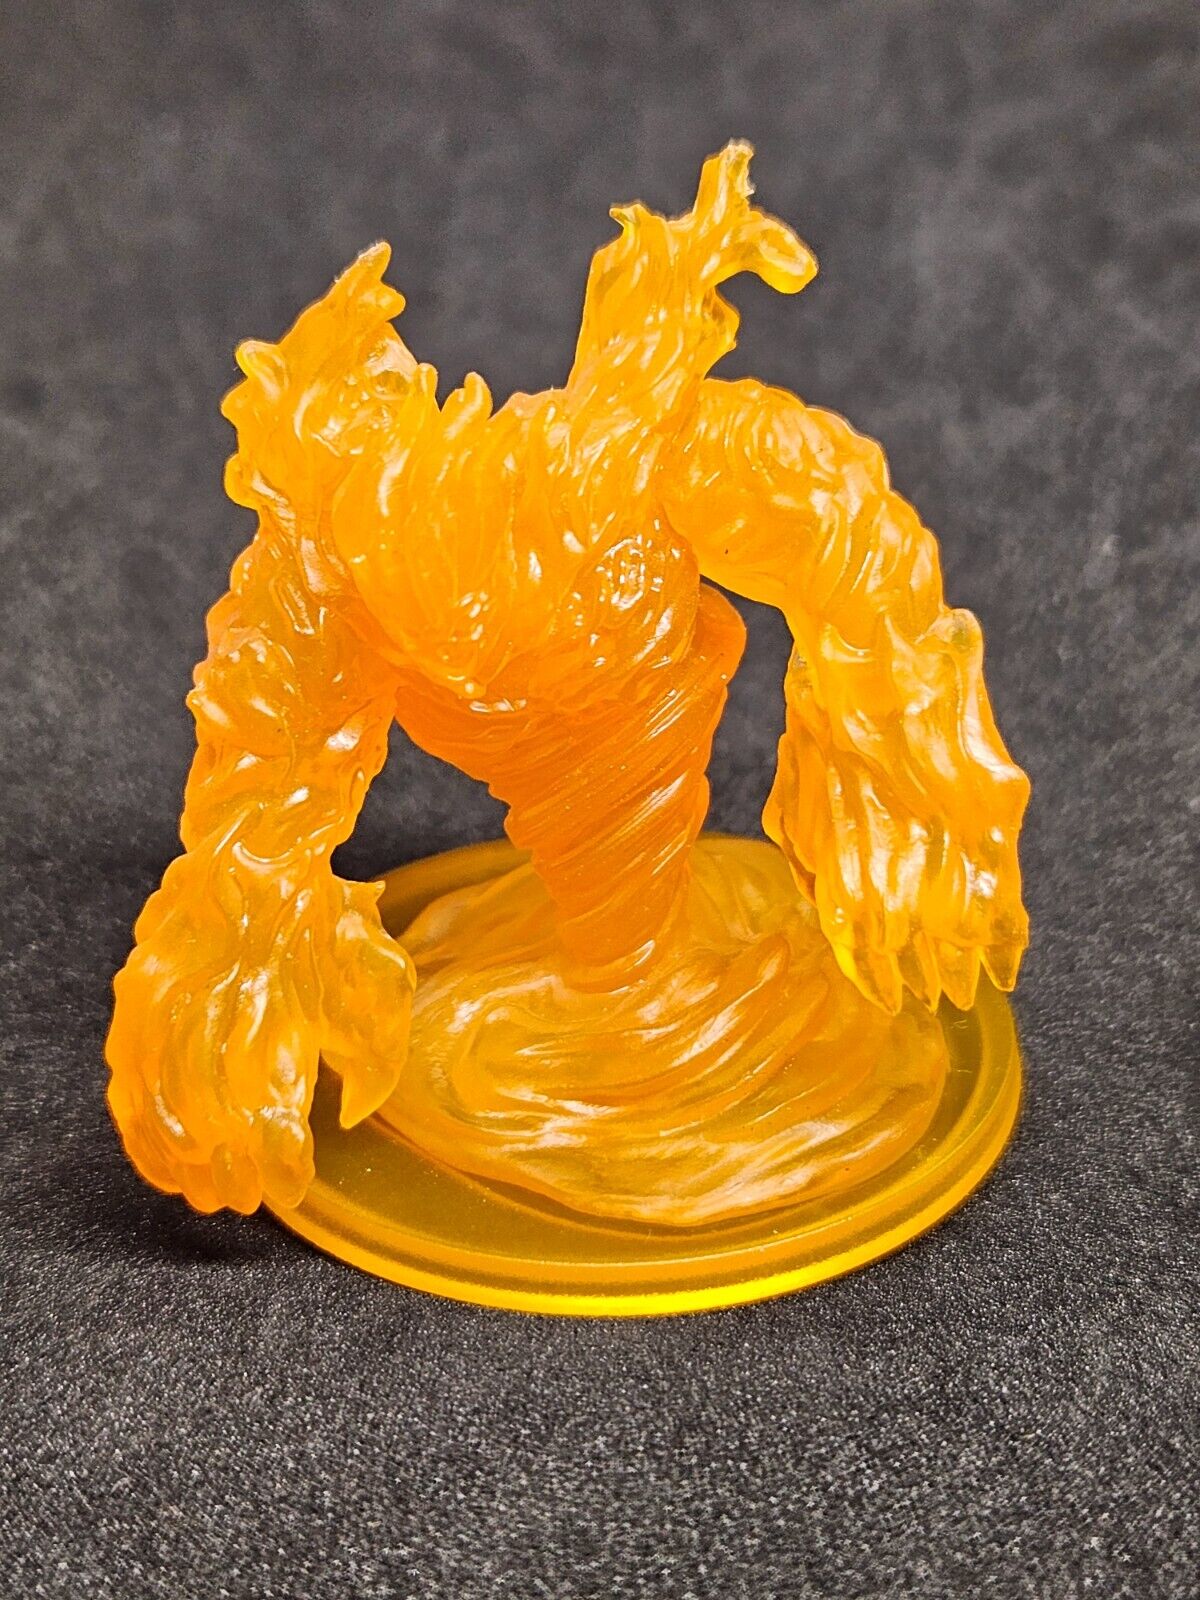 Fire Elemental Blacklist 28mm PVC Large Plastic Miniature Dungeons & Dragons Miniature Toy - Hobby Gems